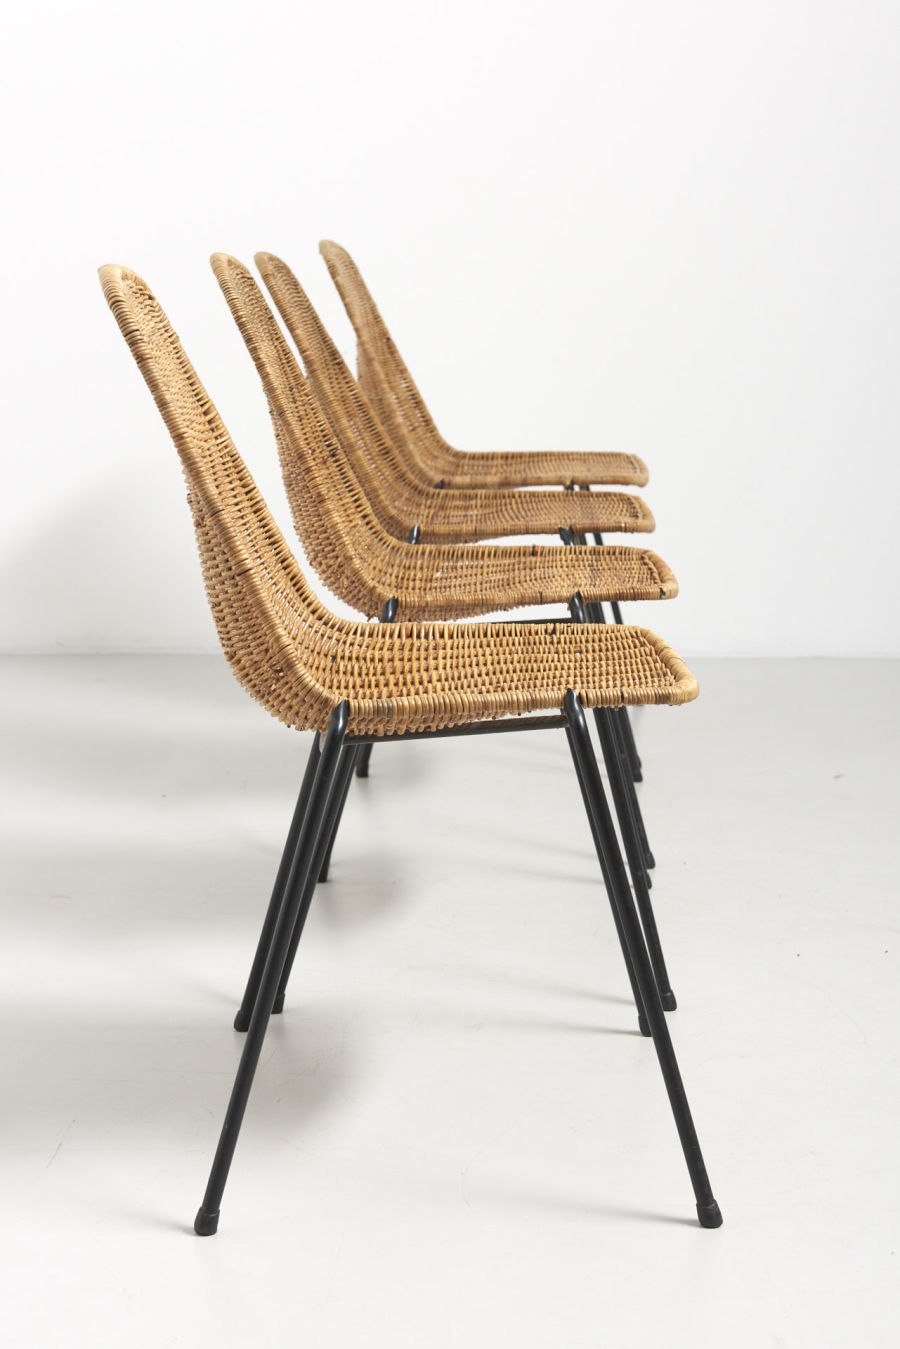 modestfurniture-vintage-2190-rattan-chairs-gian-franco-legler07